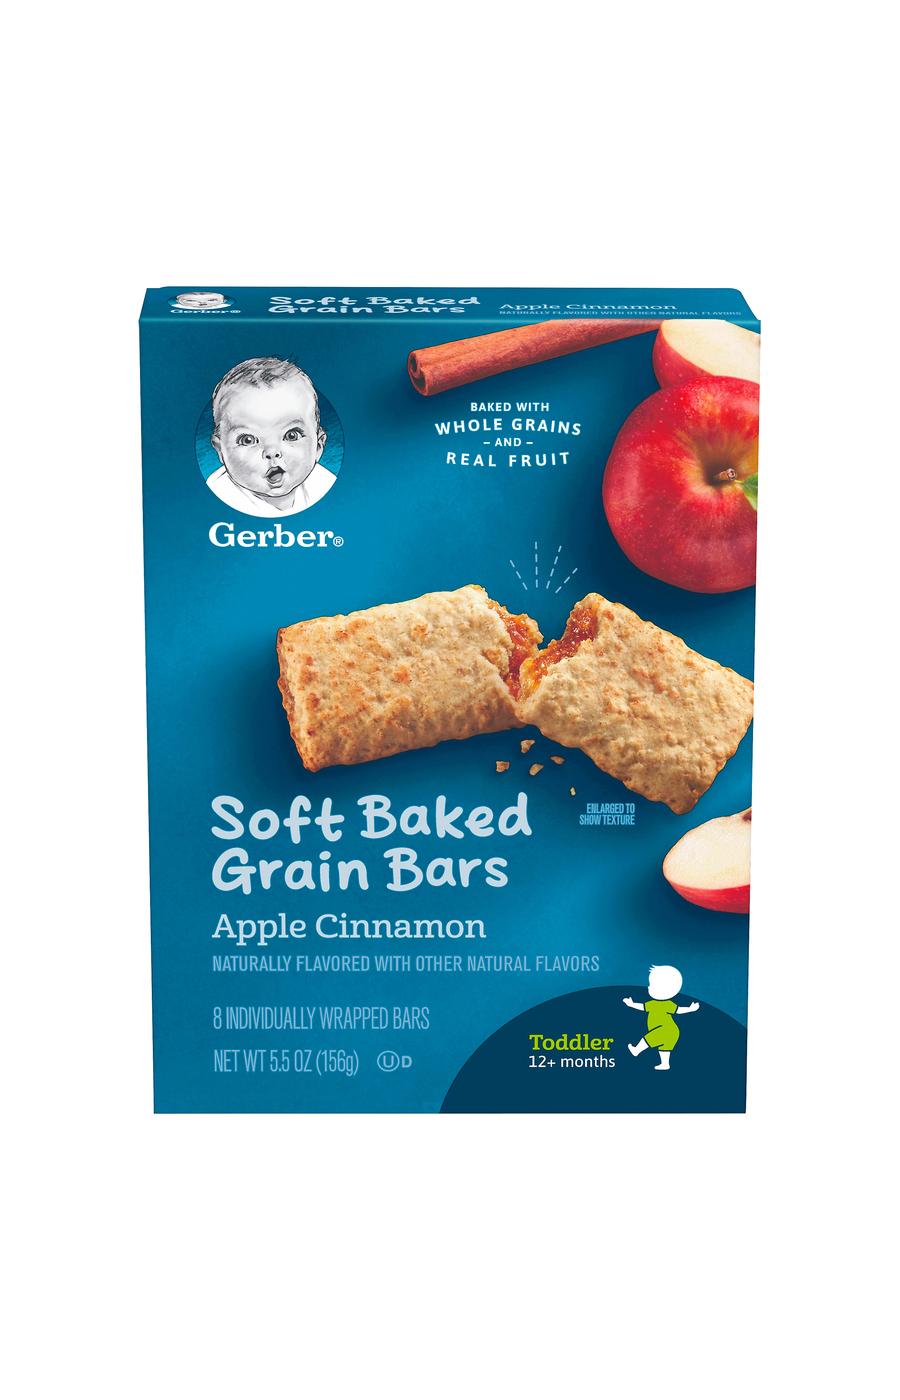 Gerber Soft Baked Grain Bars - Apple Cinnamon; image 1 of 2